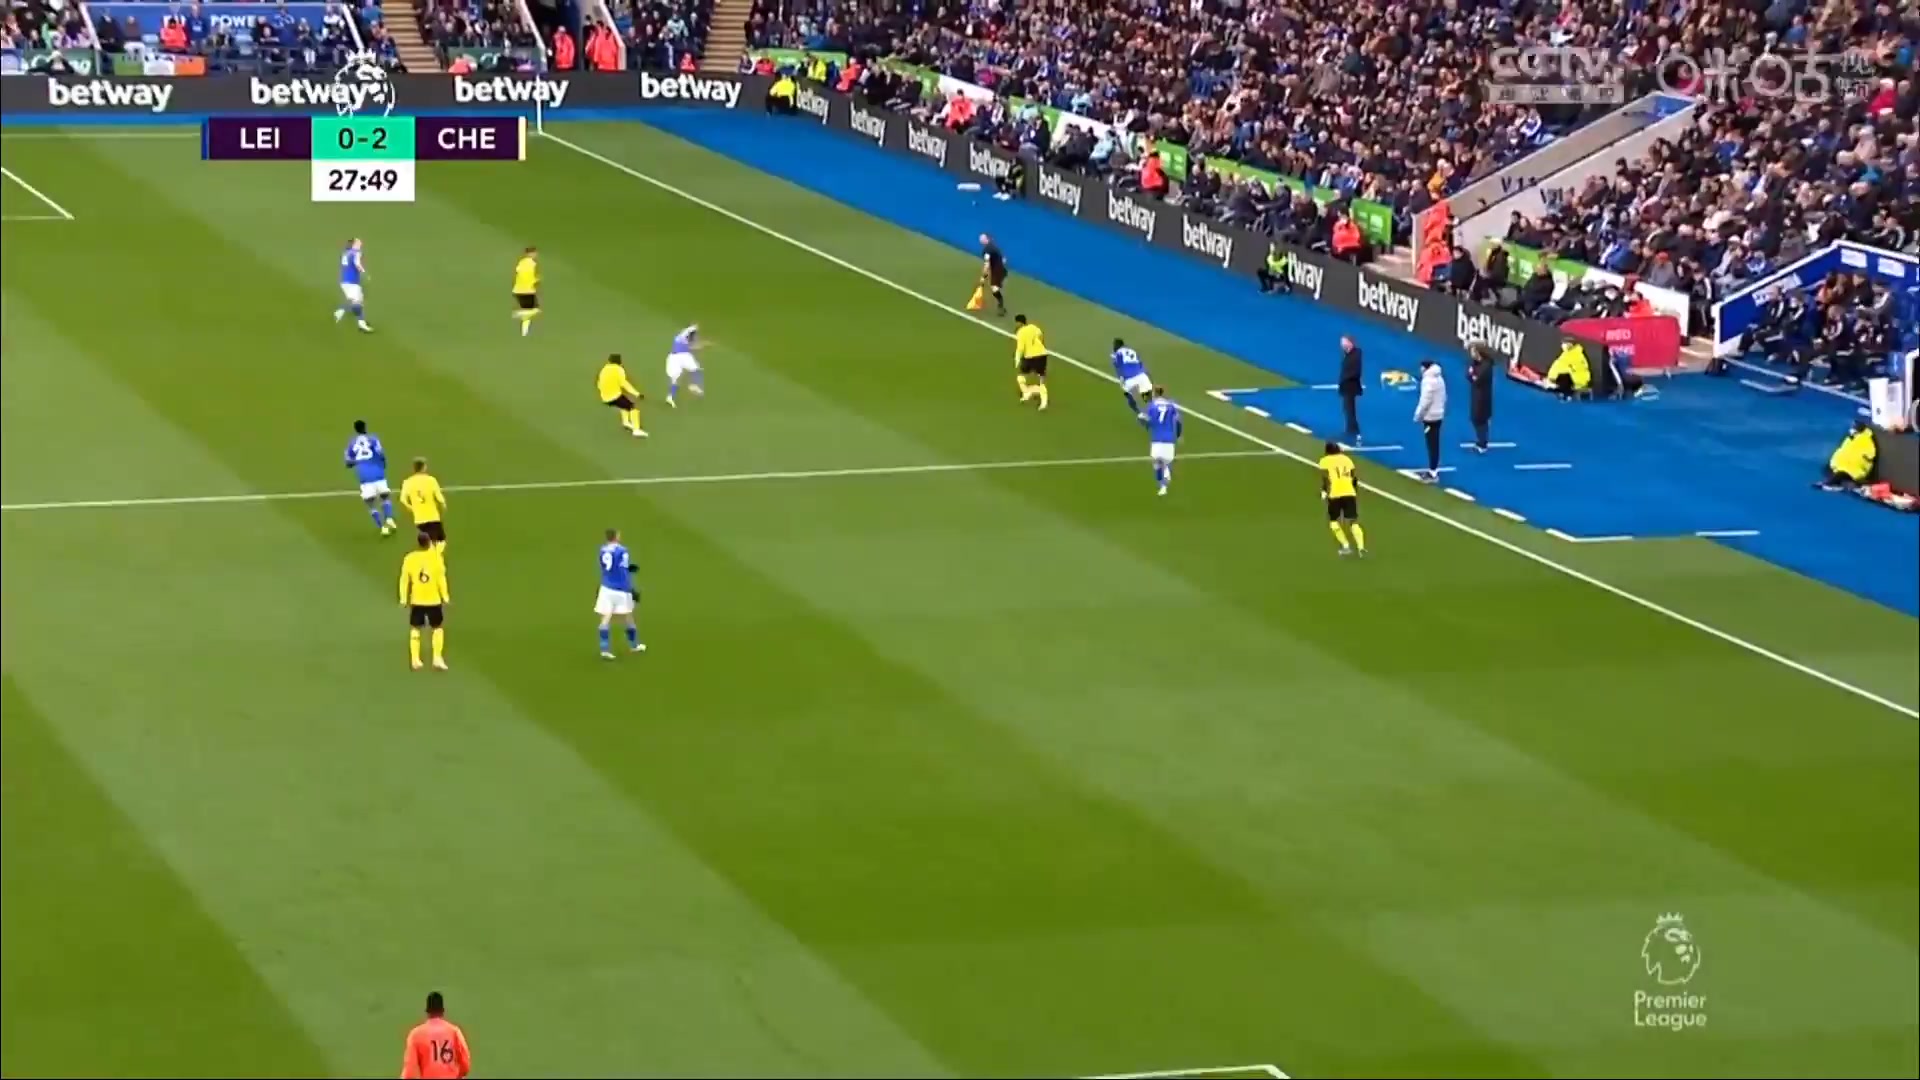 EPL Leicester City Vs Chelsea Ngolo Kante Goal in 27 min, Score 0:2